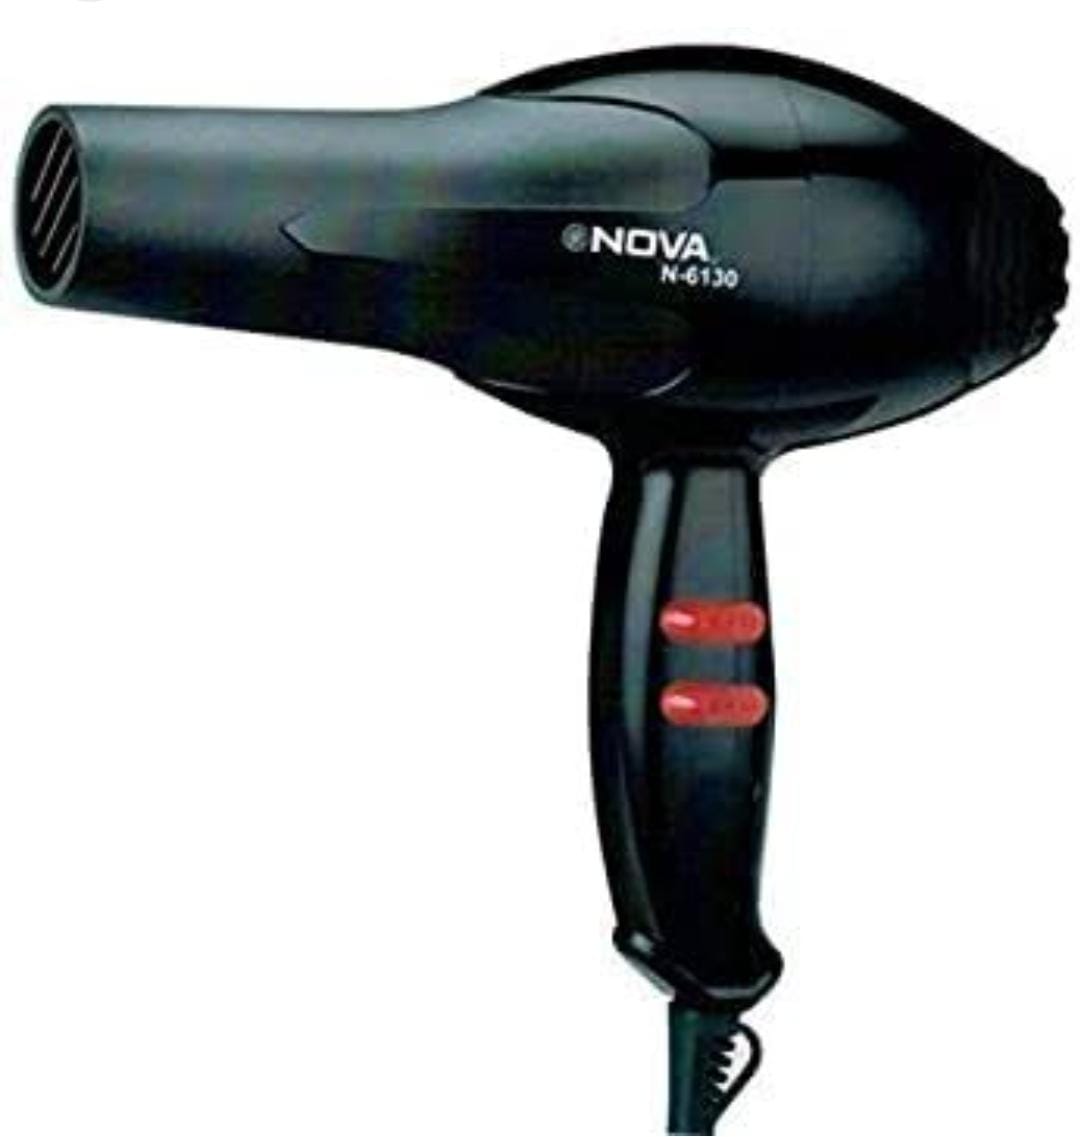 Qnova hair dryers 